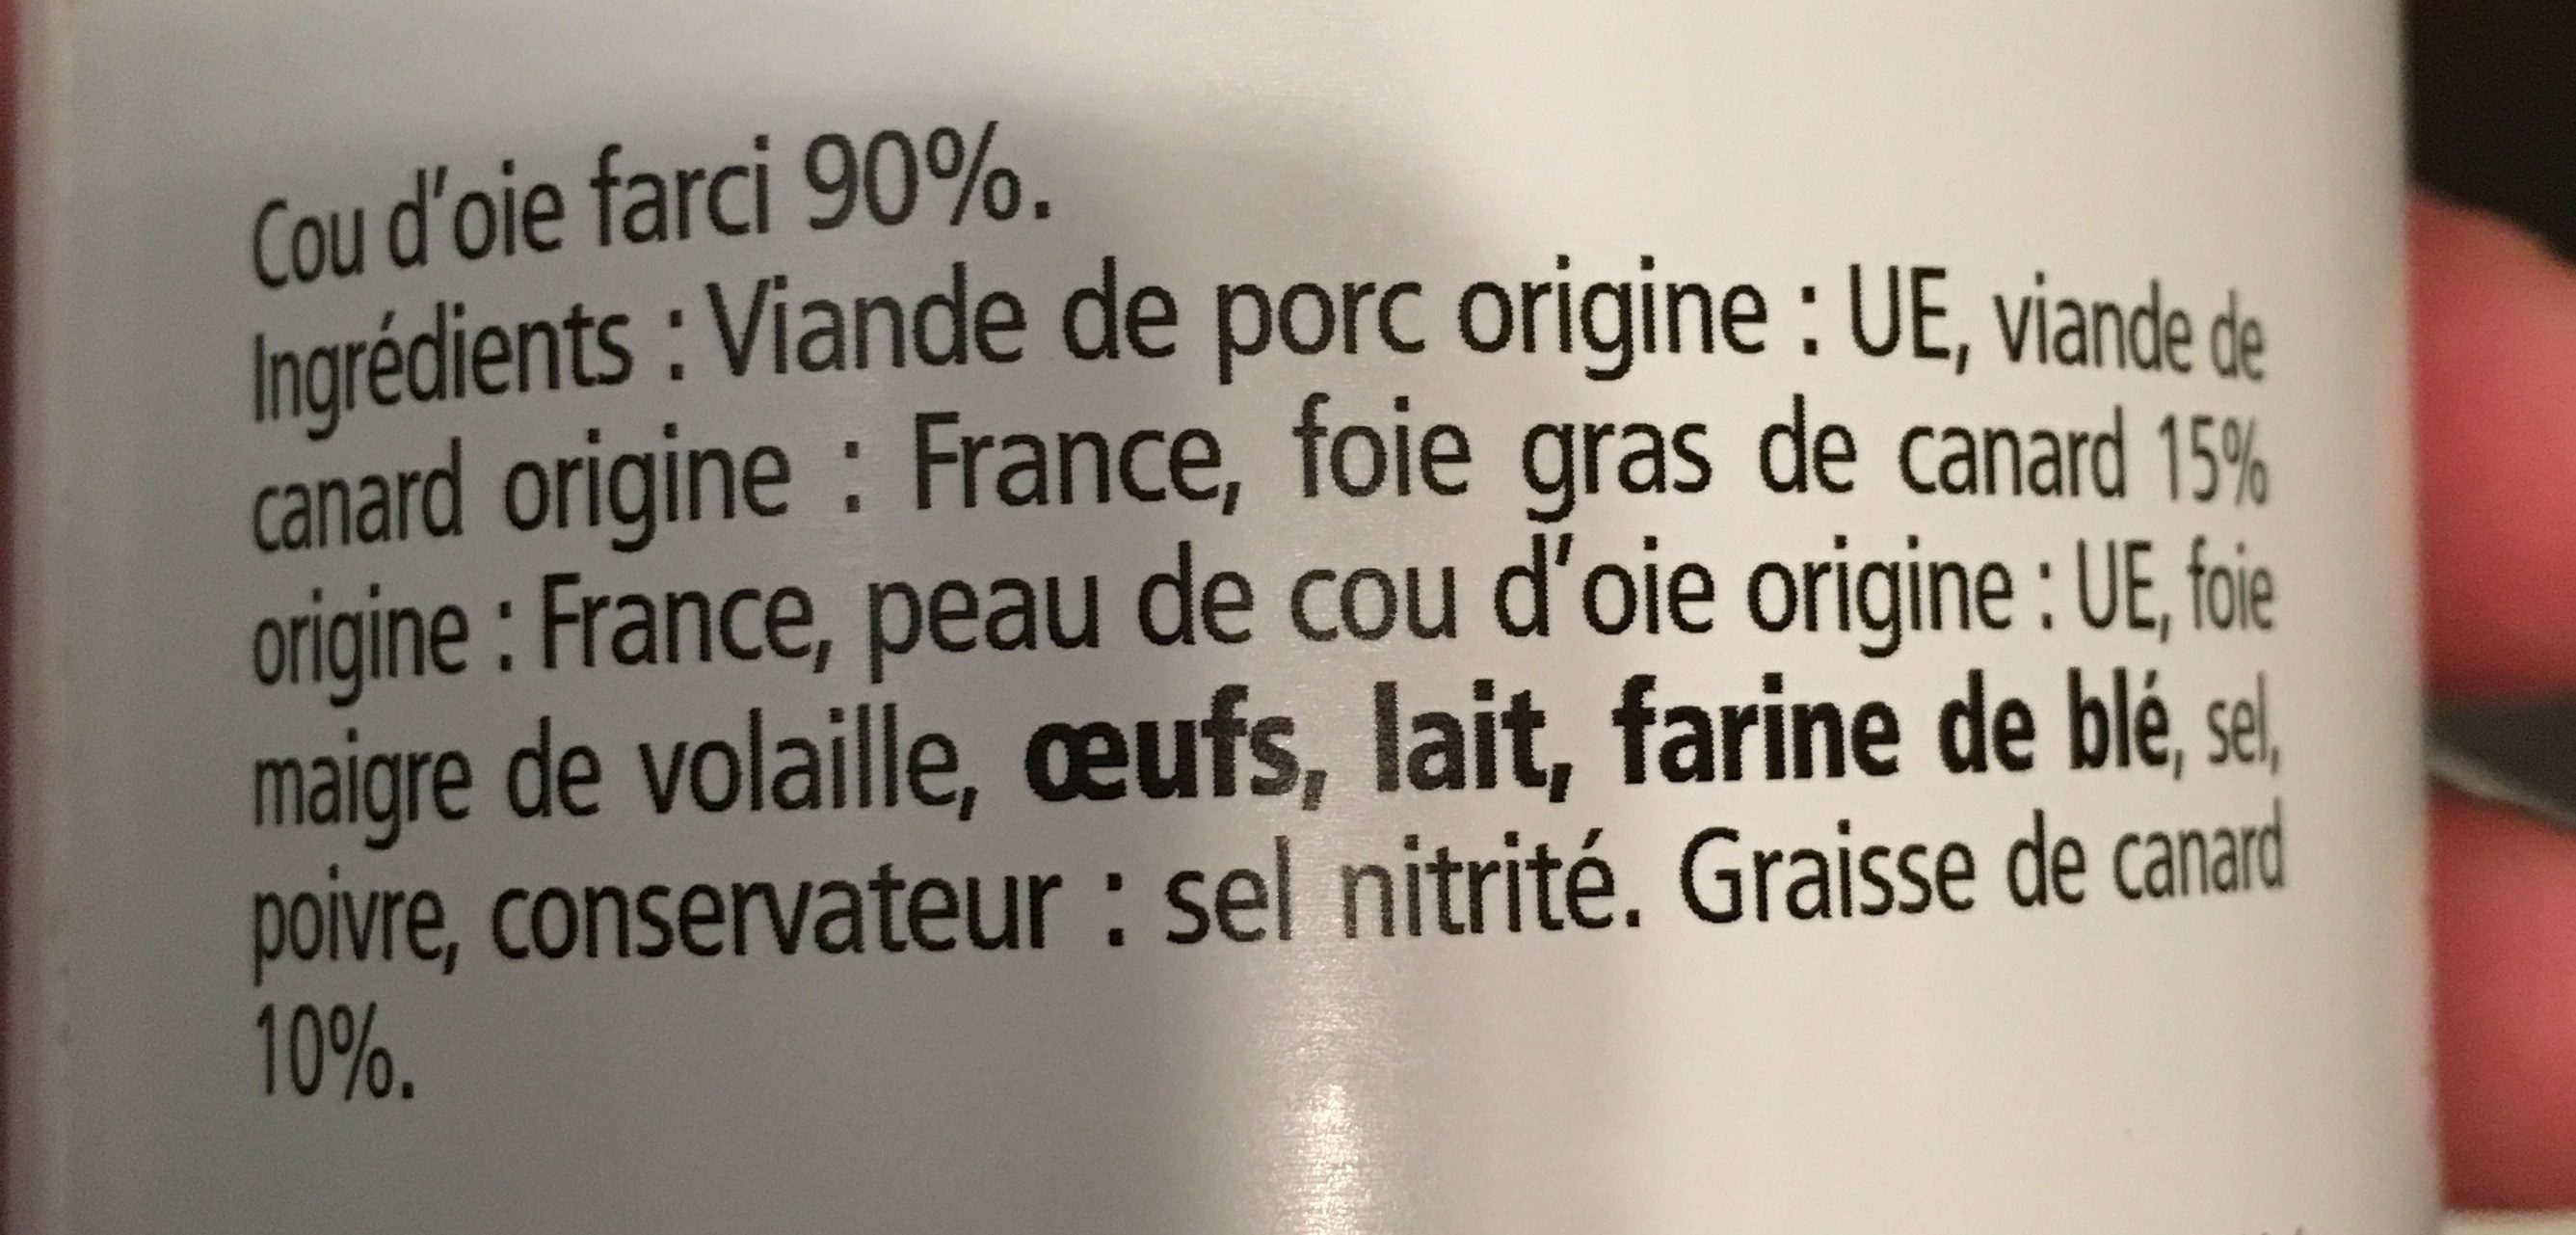 Cou d'Oie Farci - Ingredients - fr